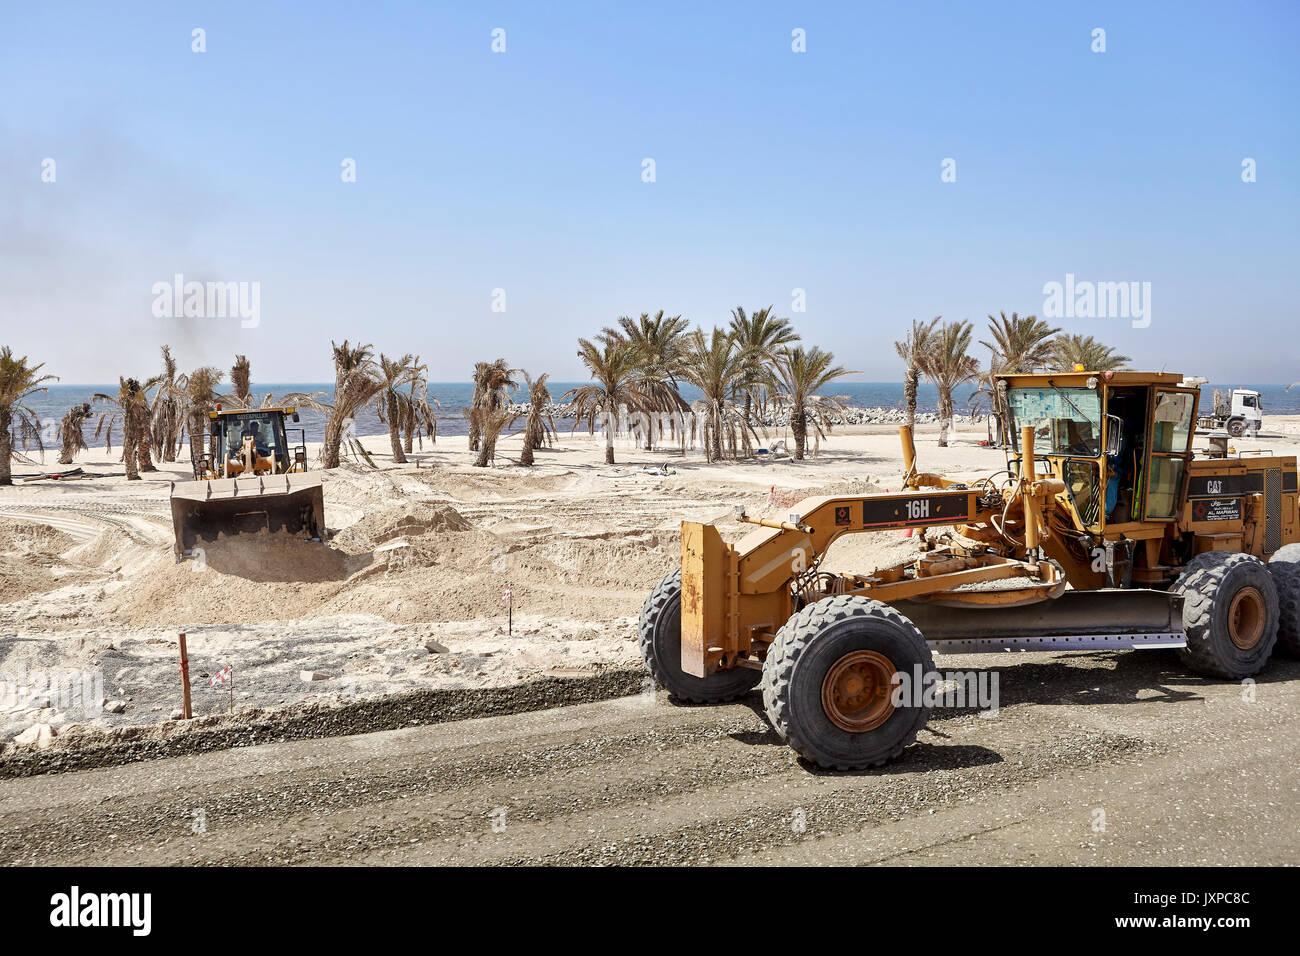 Dubai, United Arab Emirates - May 03, 2017: Heavy duty vehicles at the construction site along the road between Dubai and Sharjah. Stock Photo